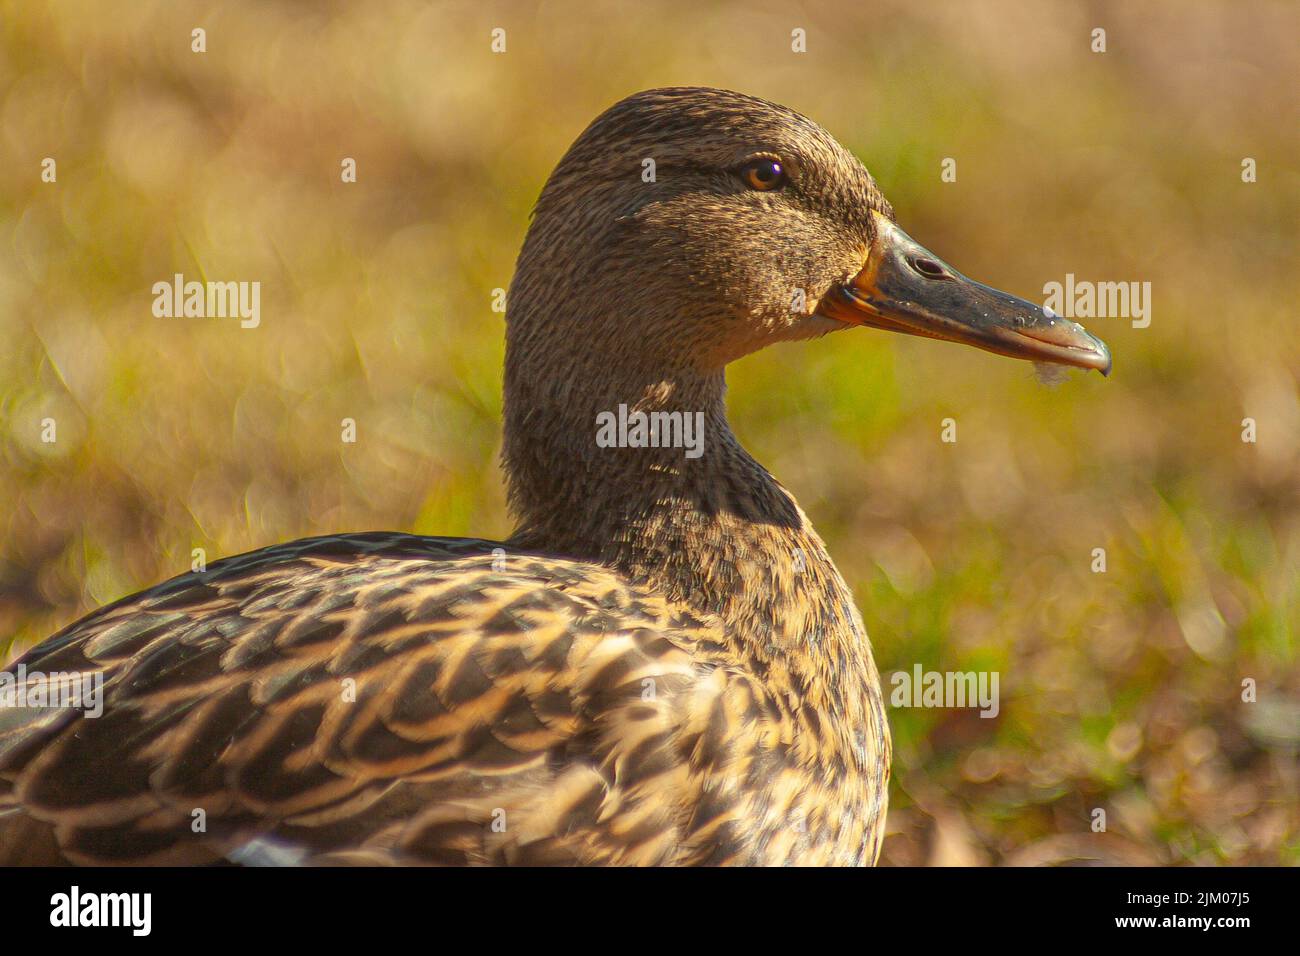 A closeup shot of a brown mallard duck perched on a field Stock Photo